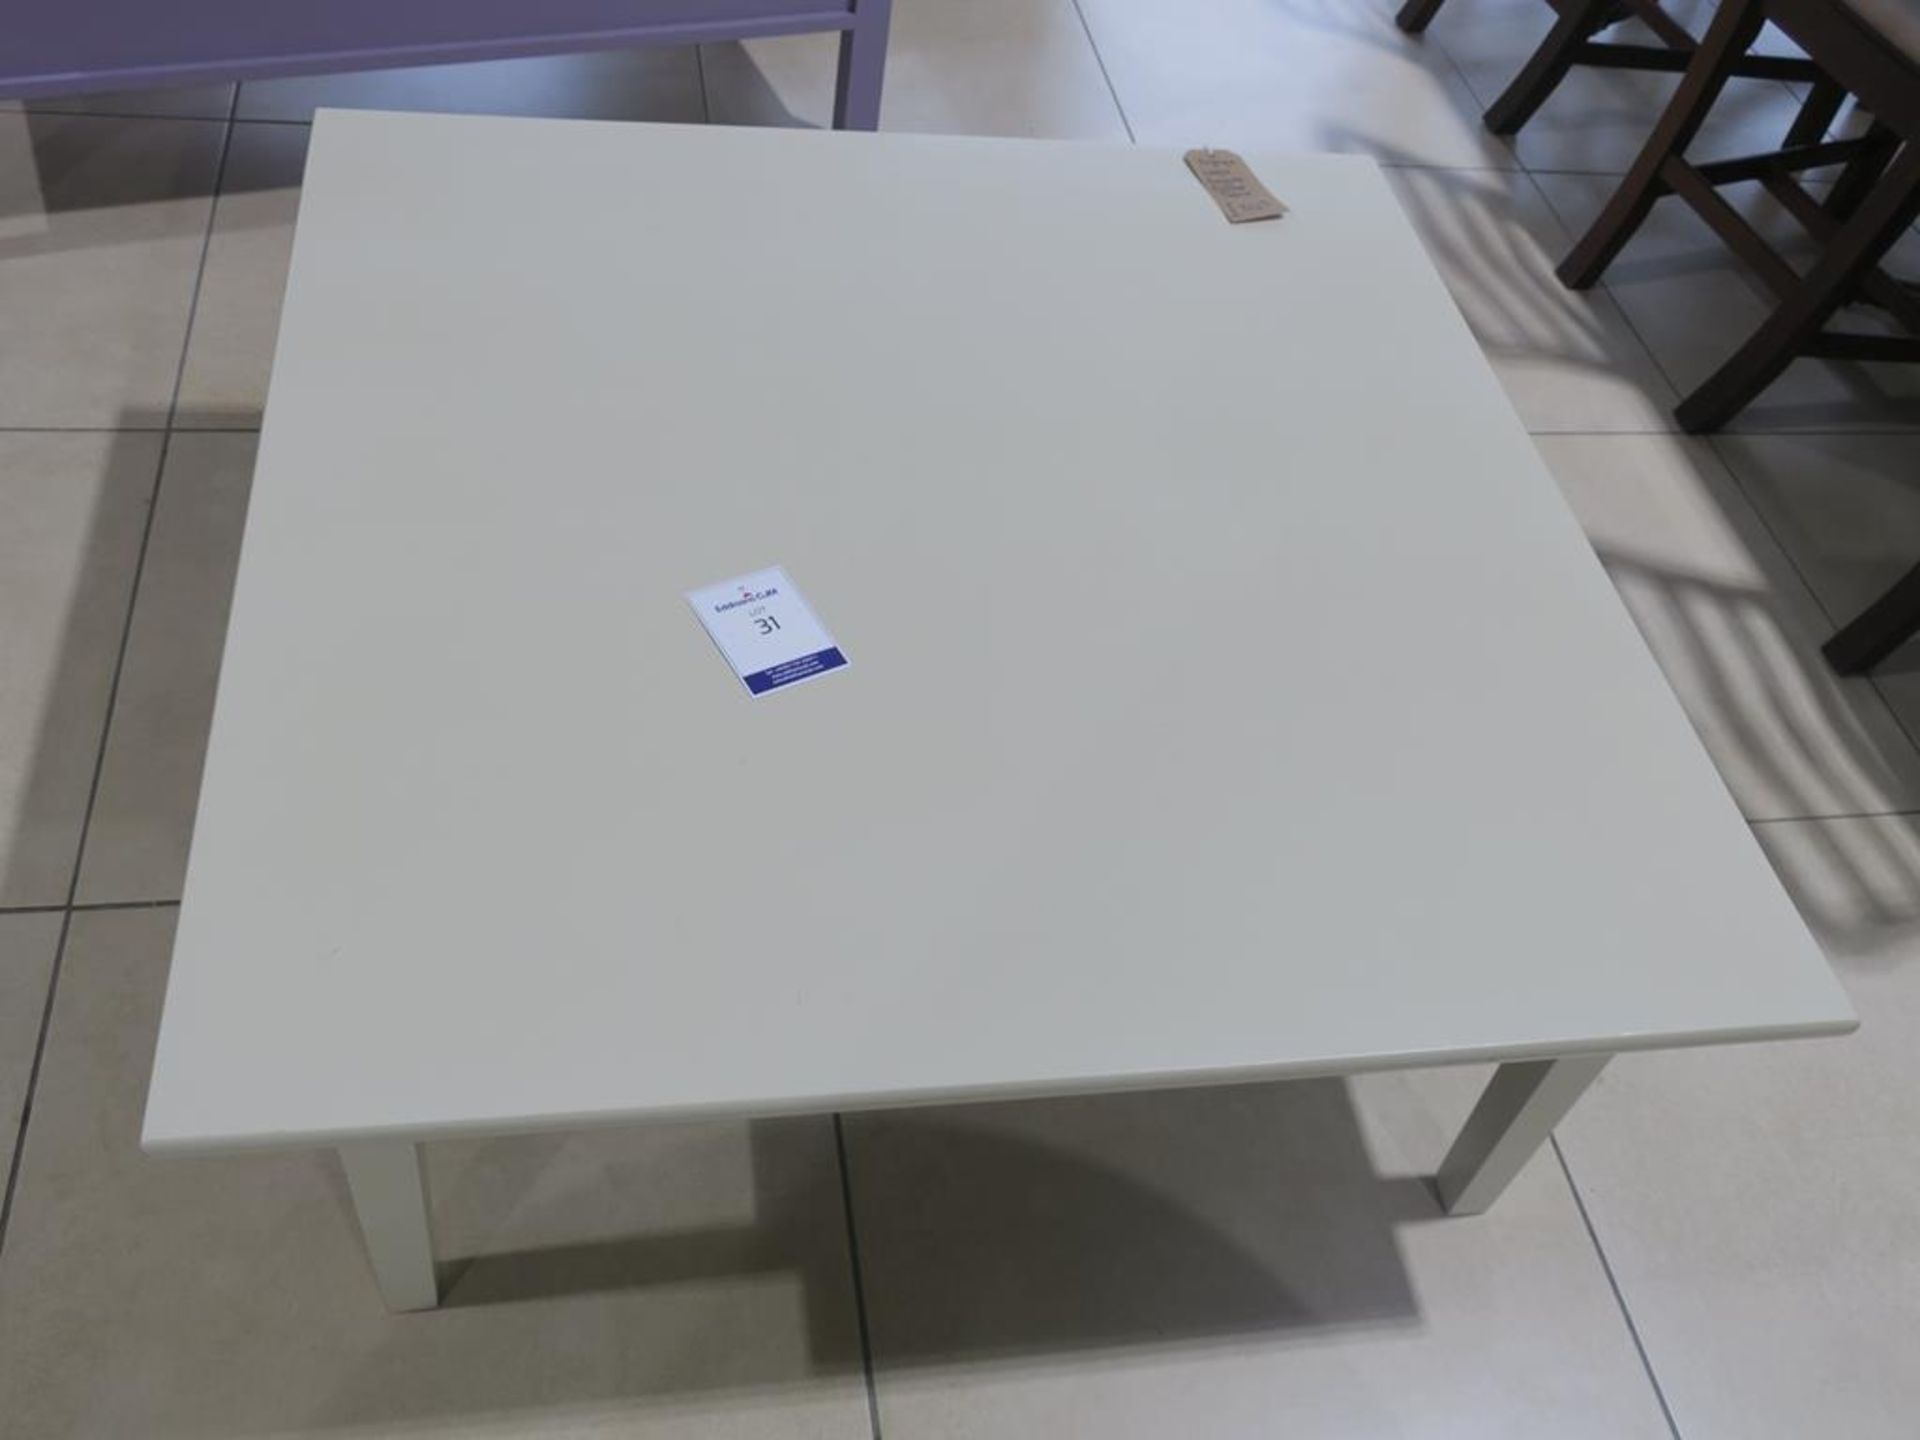 * A Voyage Large Square Coffee Table (H 41cm, W 100cm, D 100cm) (RRP £345)